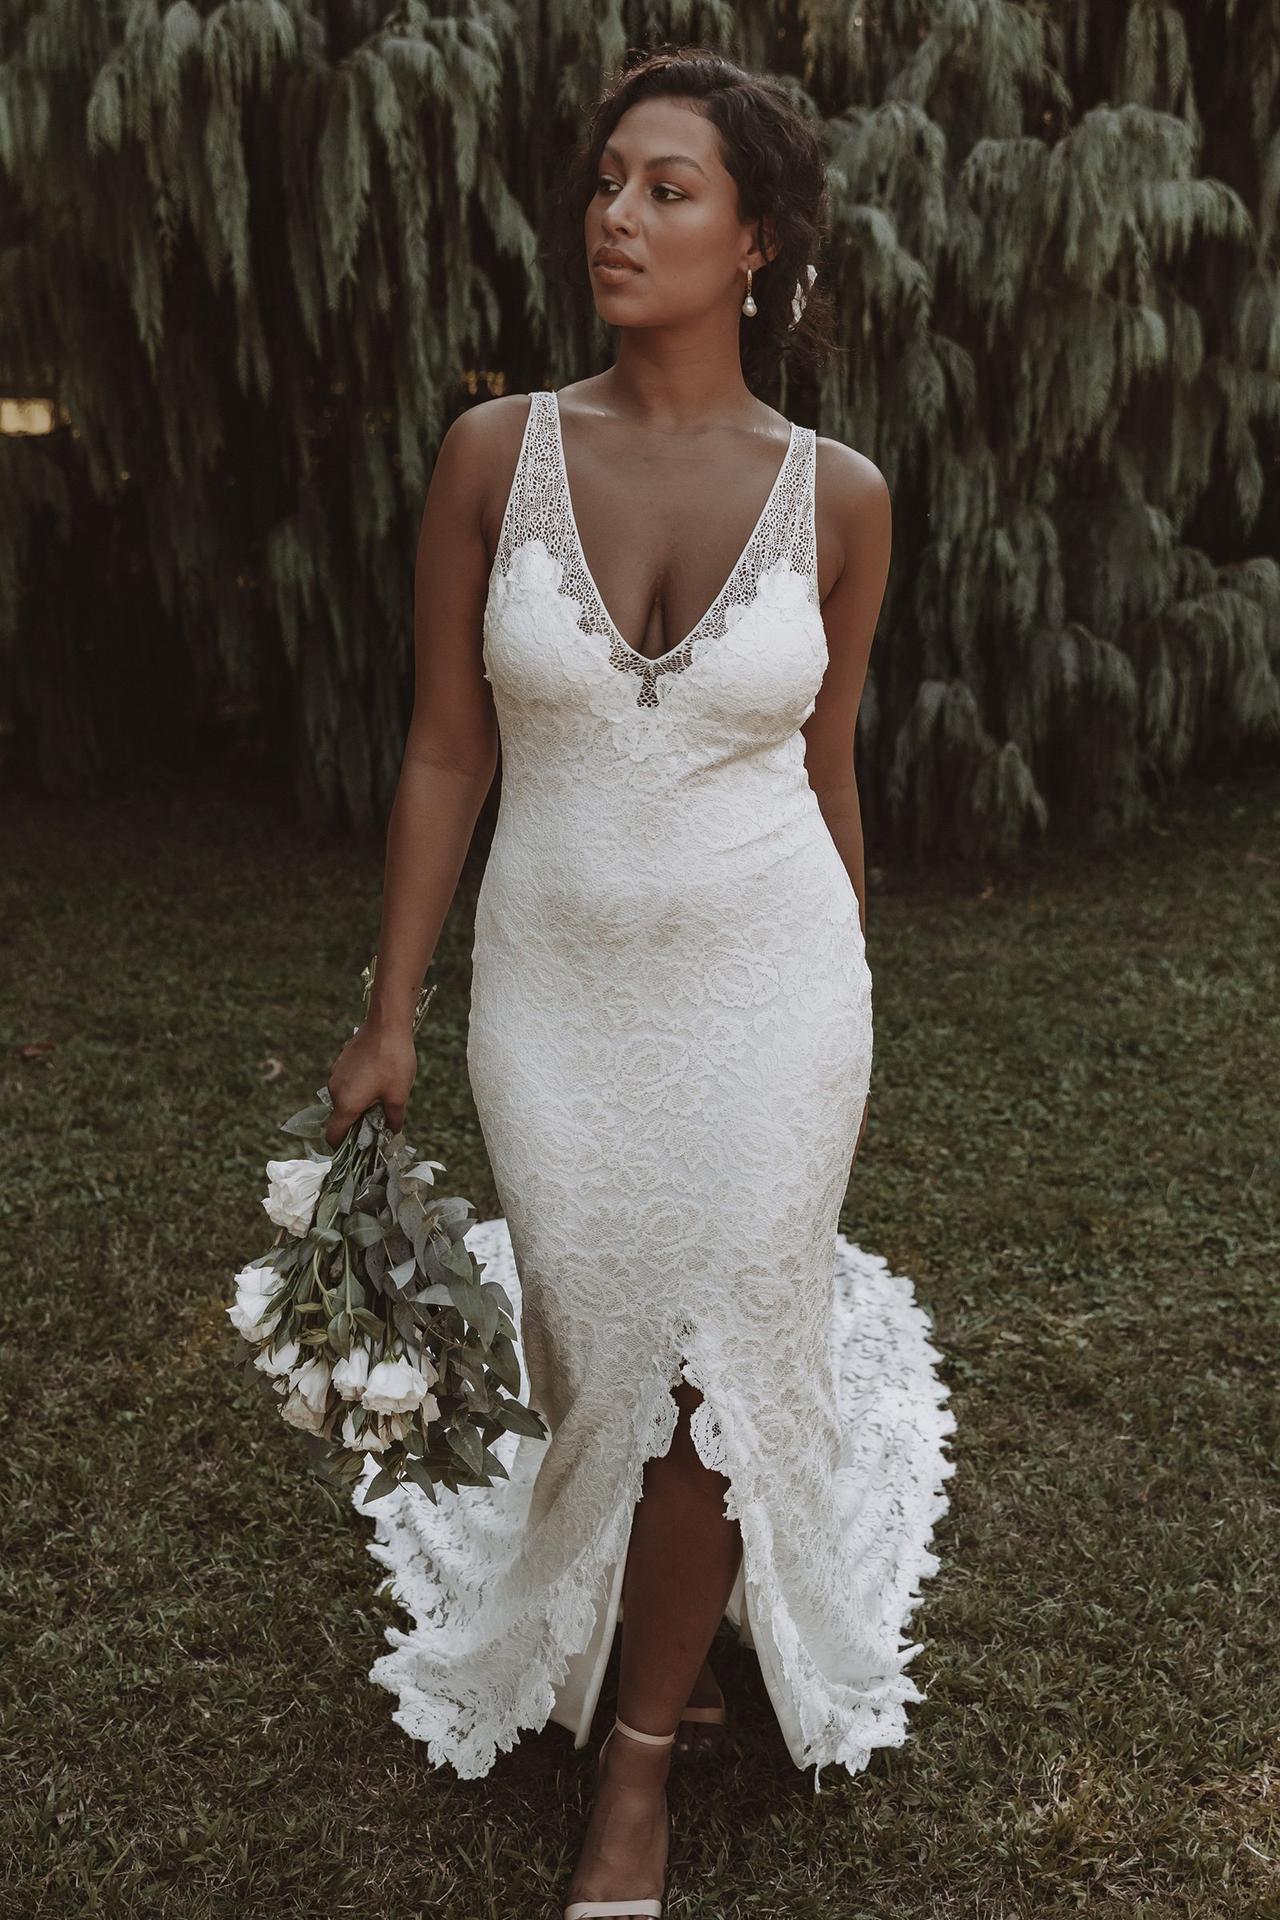 anthony schirripa add big boobs wedding dress photo